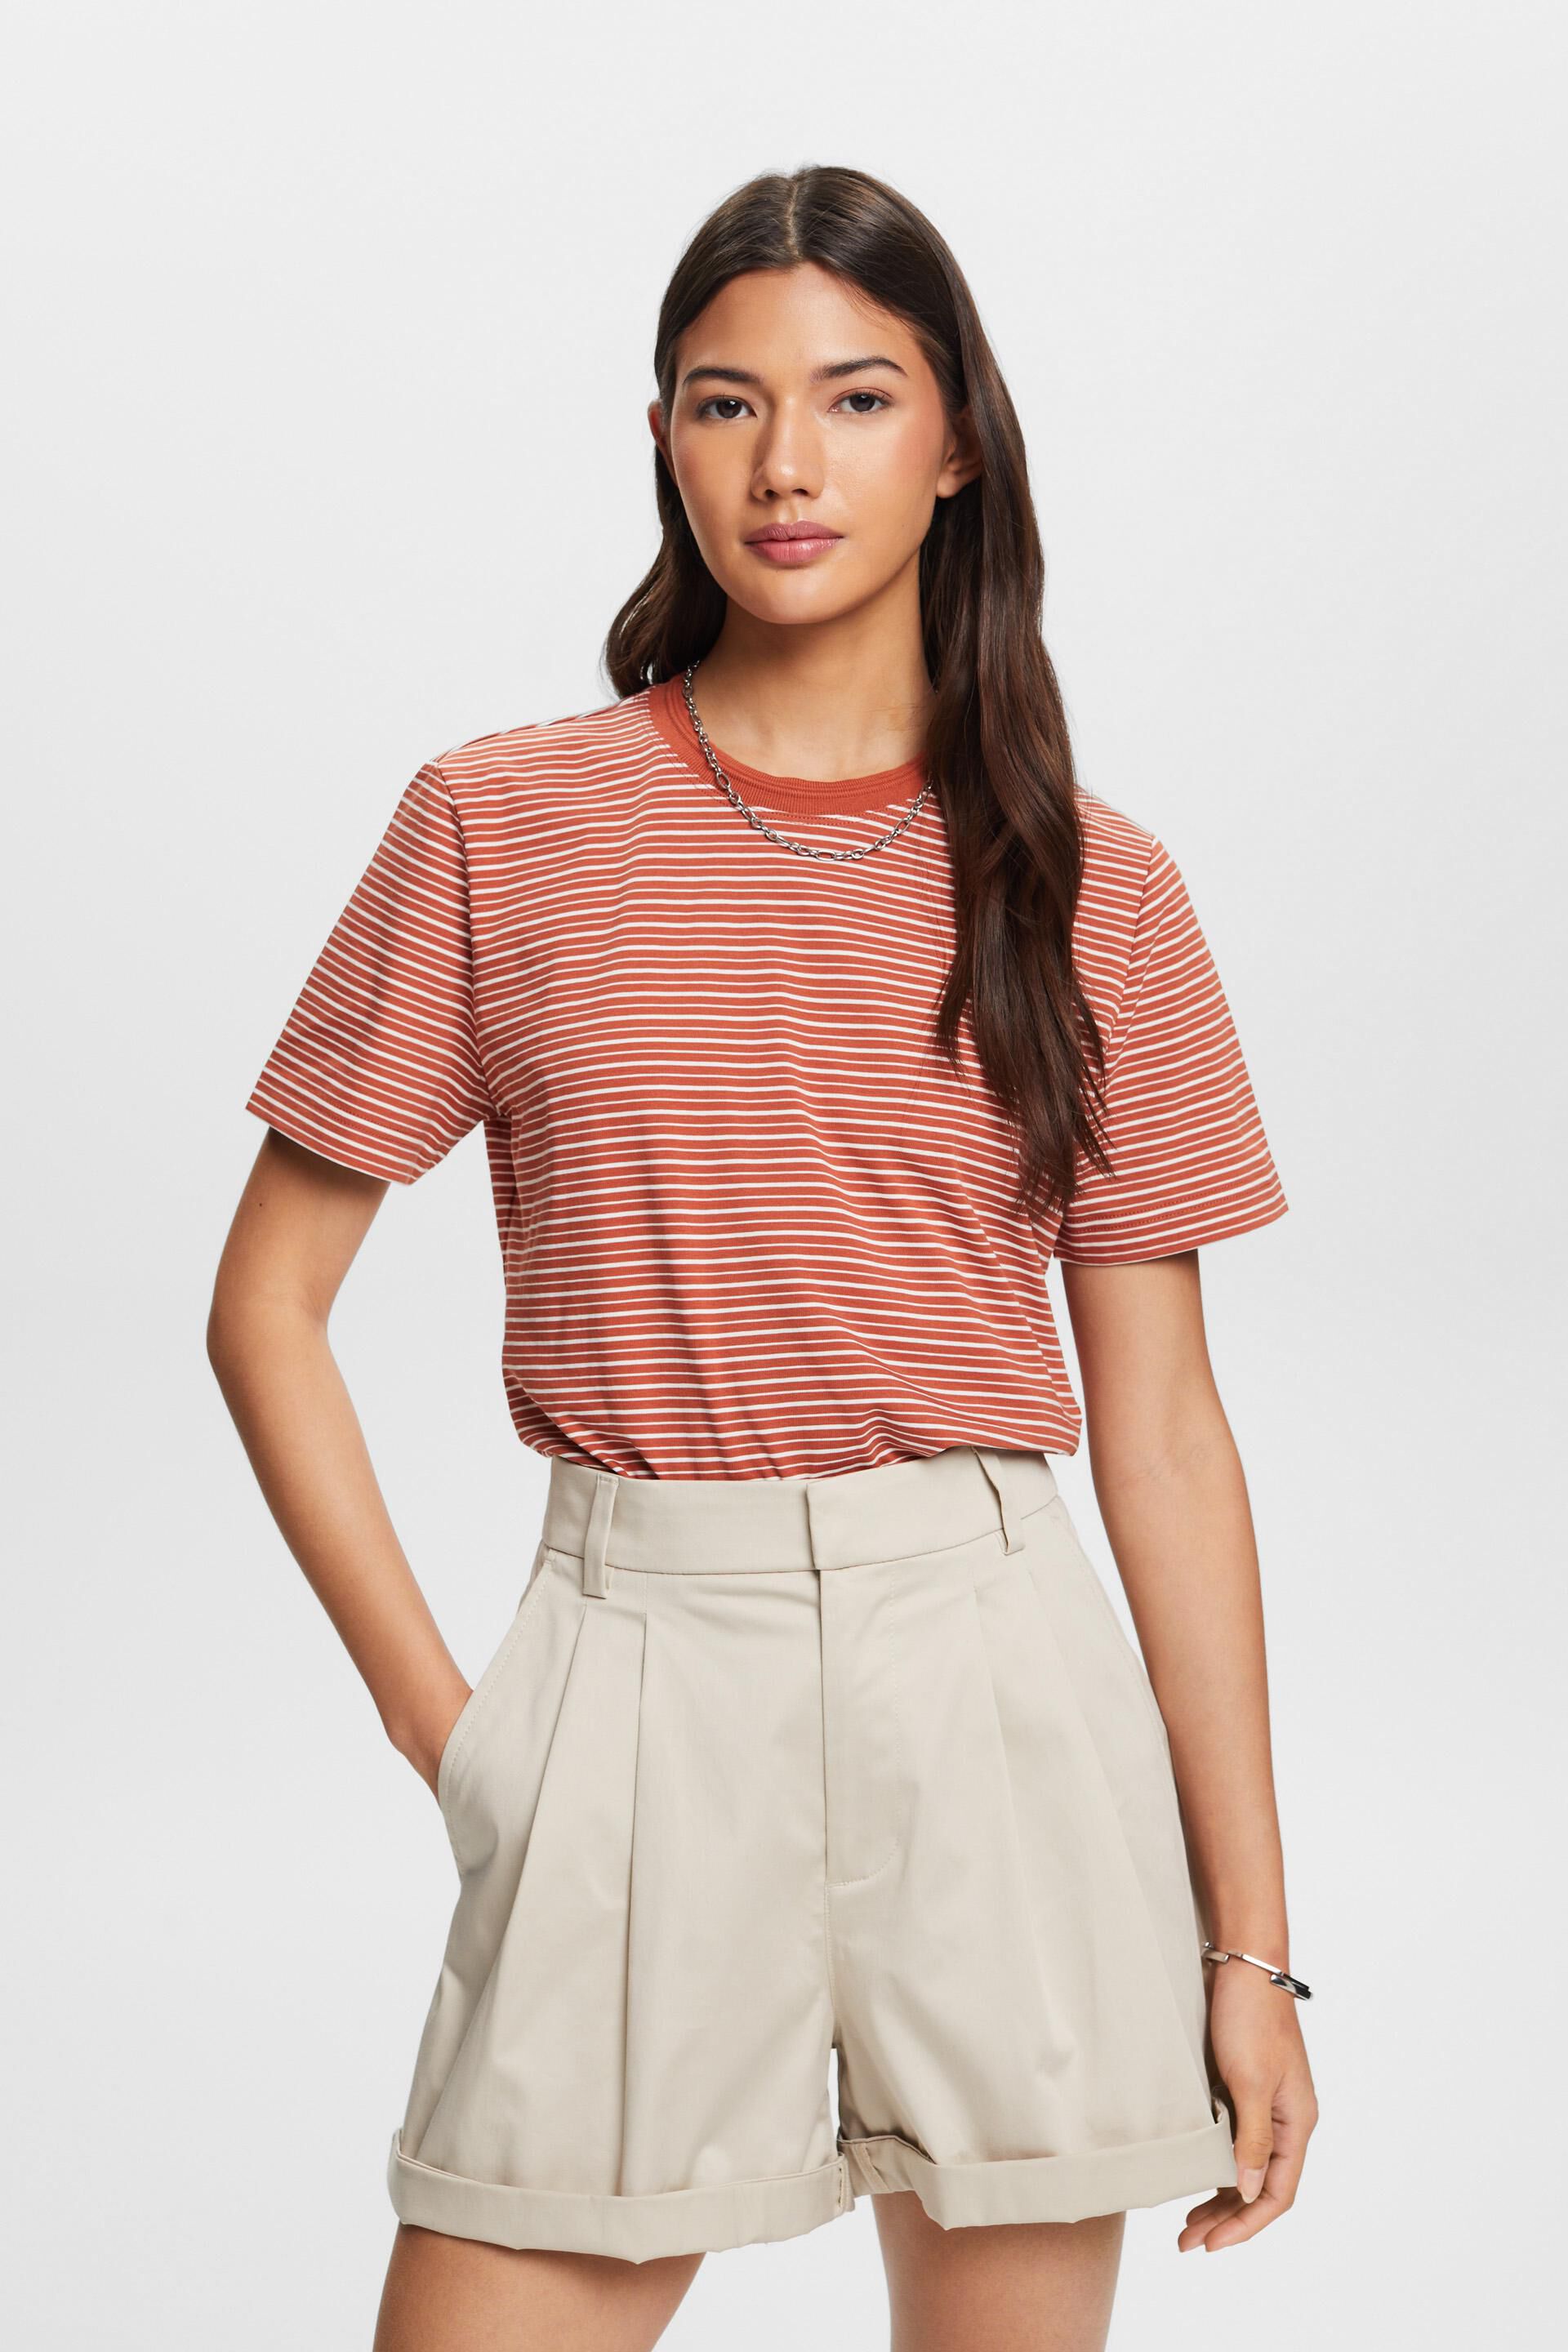 Esprit Damen Striped T-shirt, 100% cotton